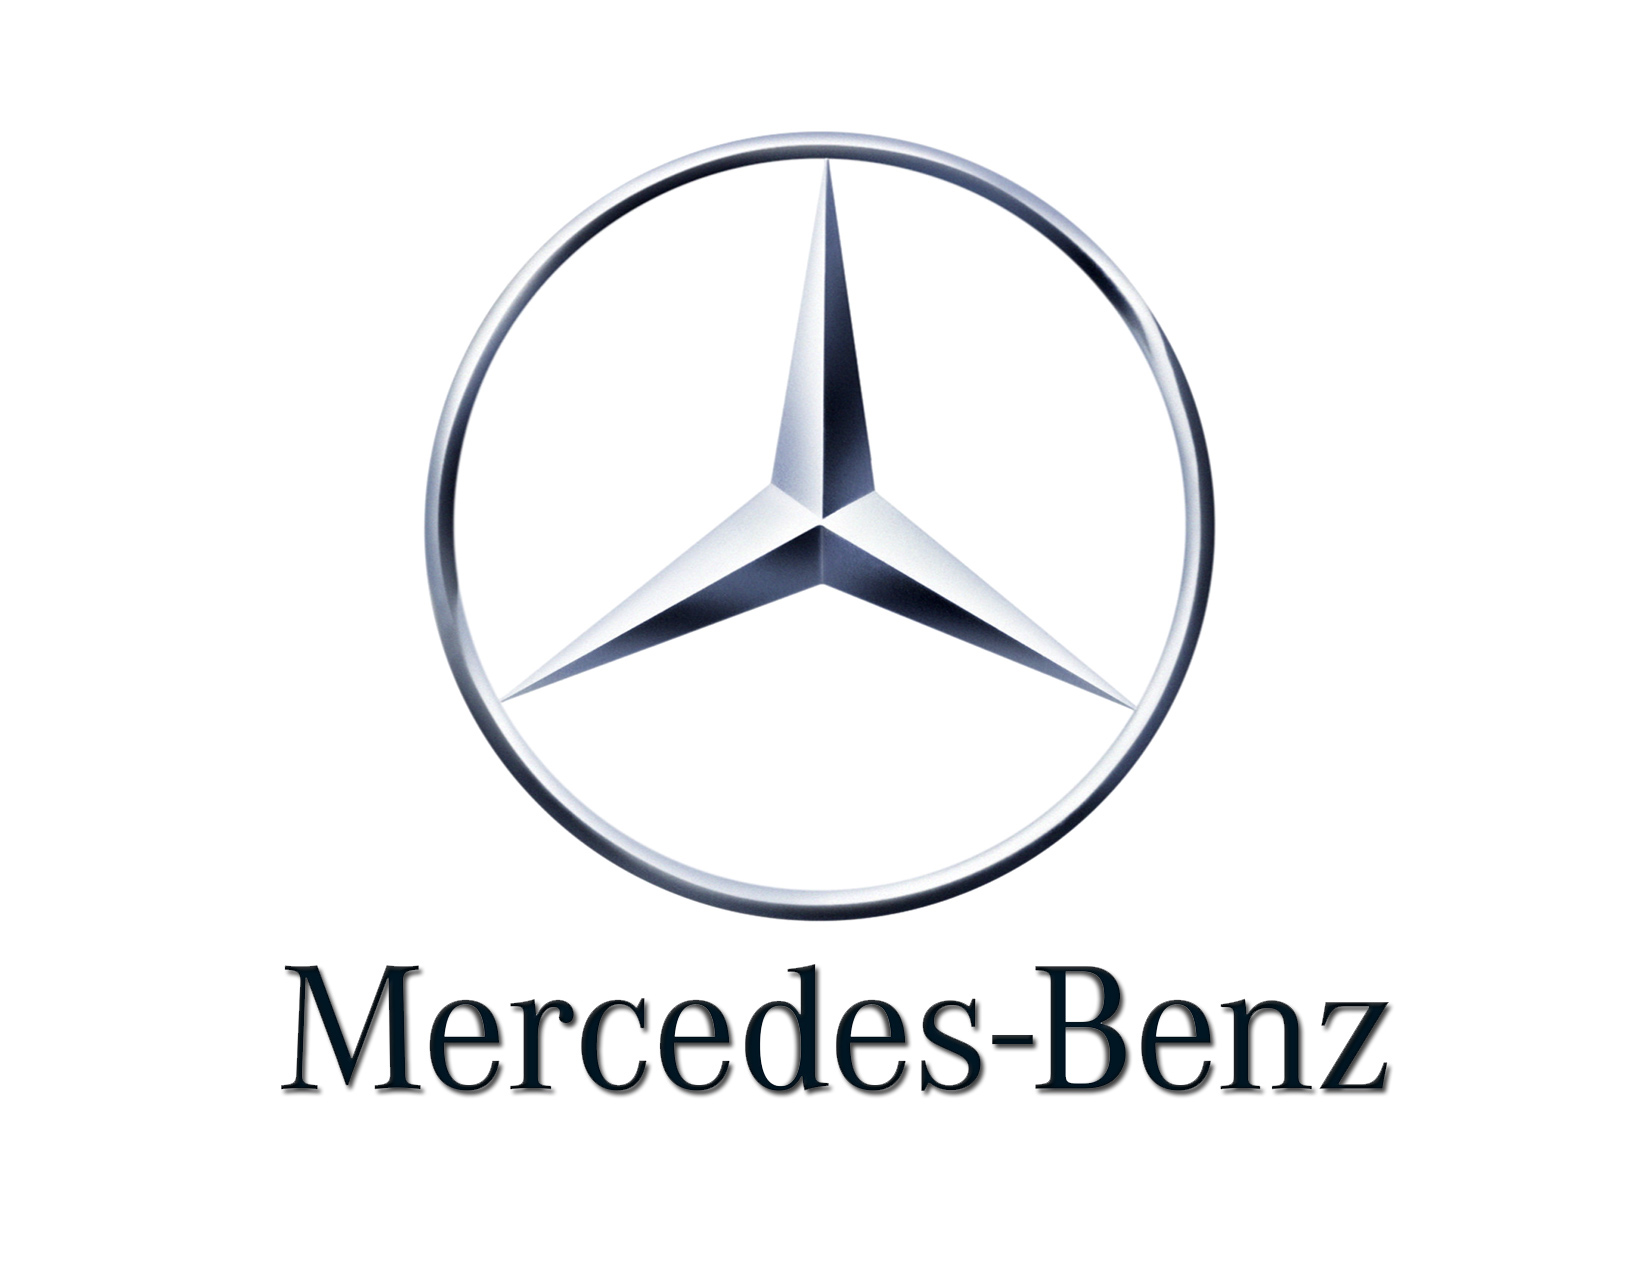 Benz mercedes sign #5